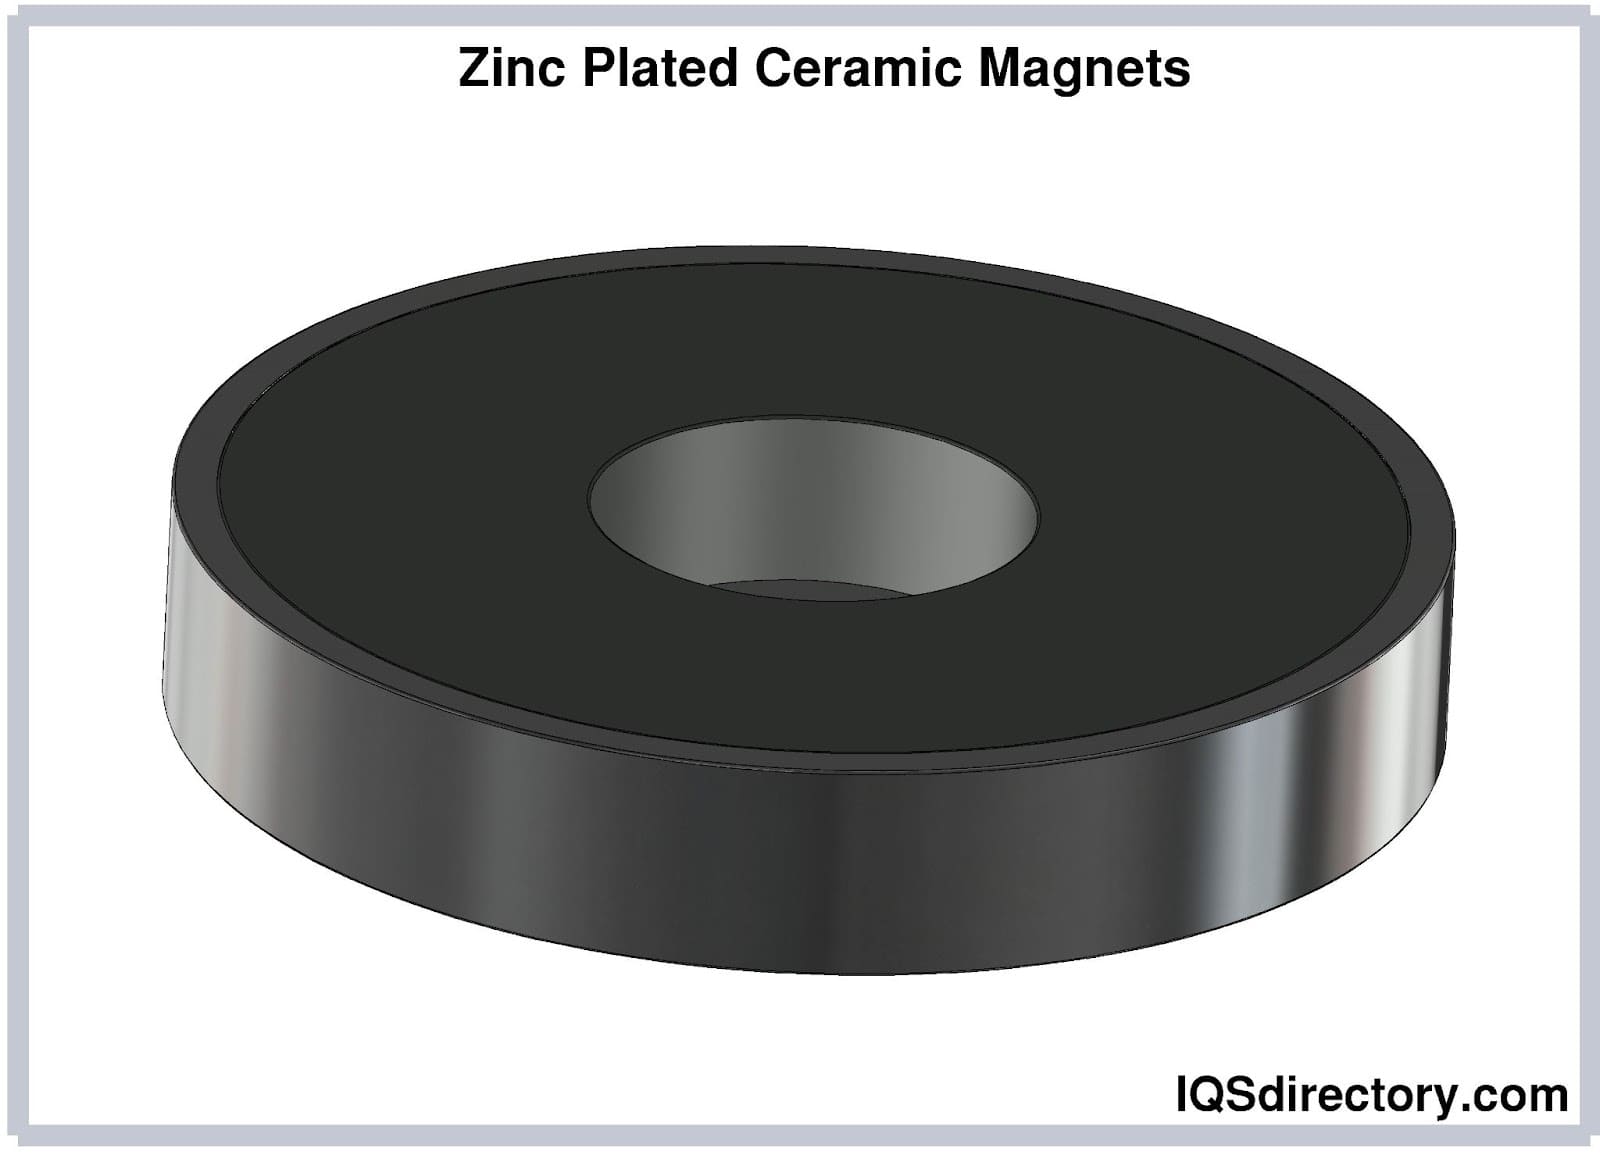 Zinc Plated Ceramic Magnets